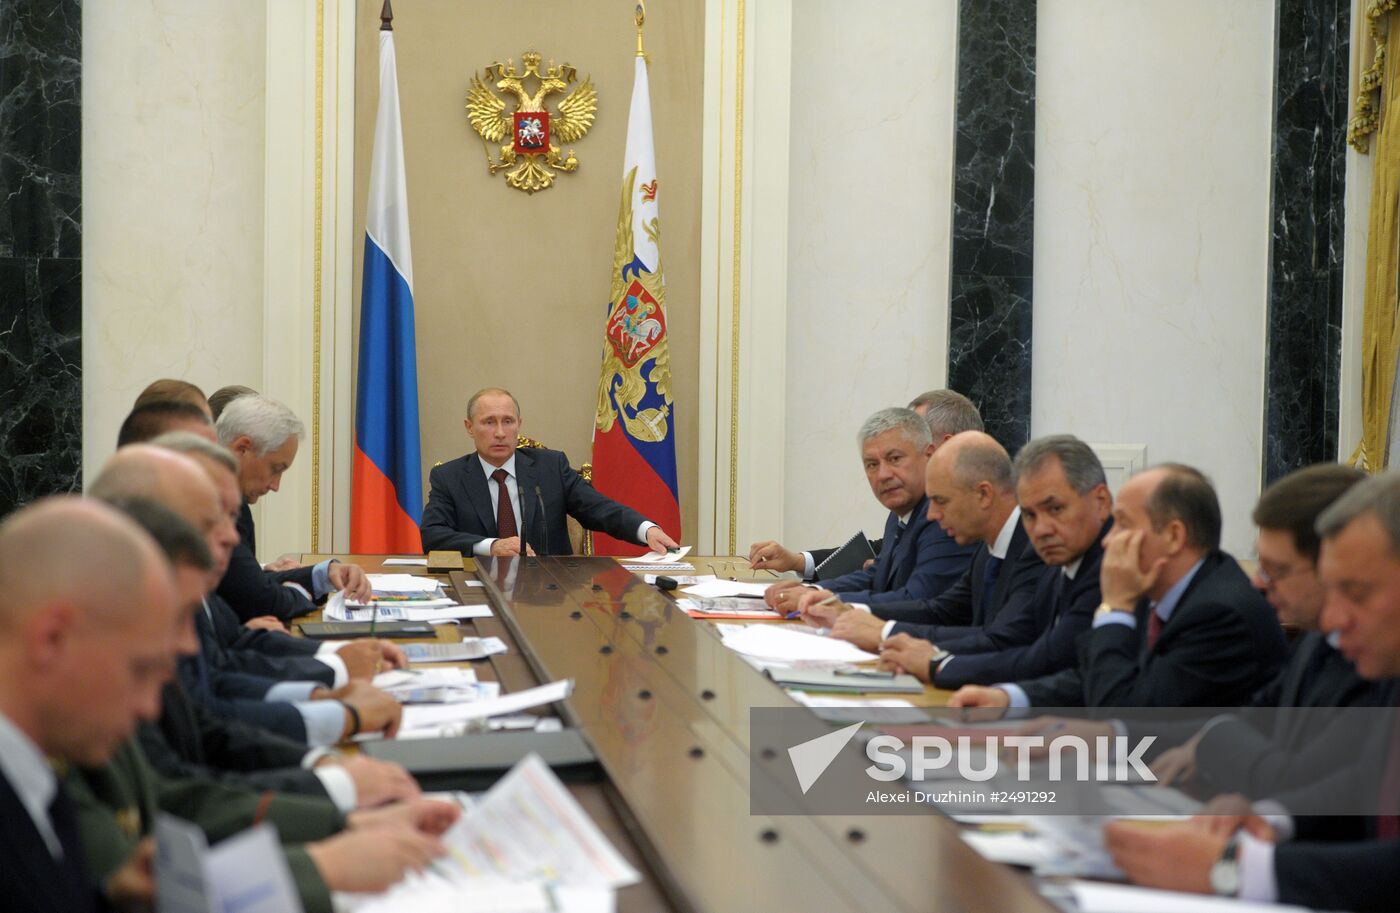 Vladimir Putin chairs meeting on development of State Armament Program for 2016-2025